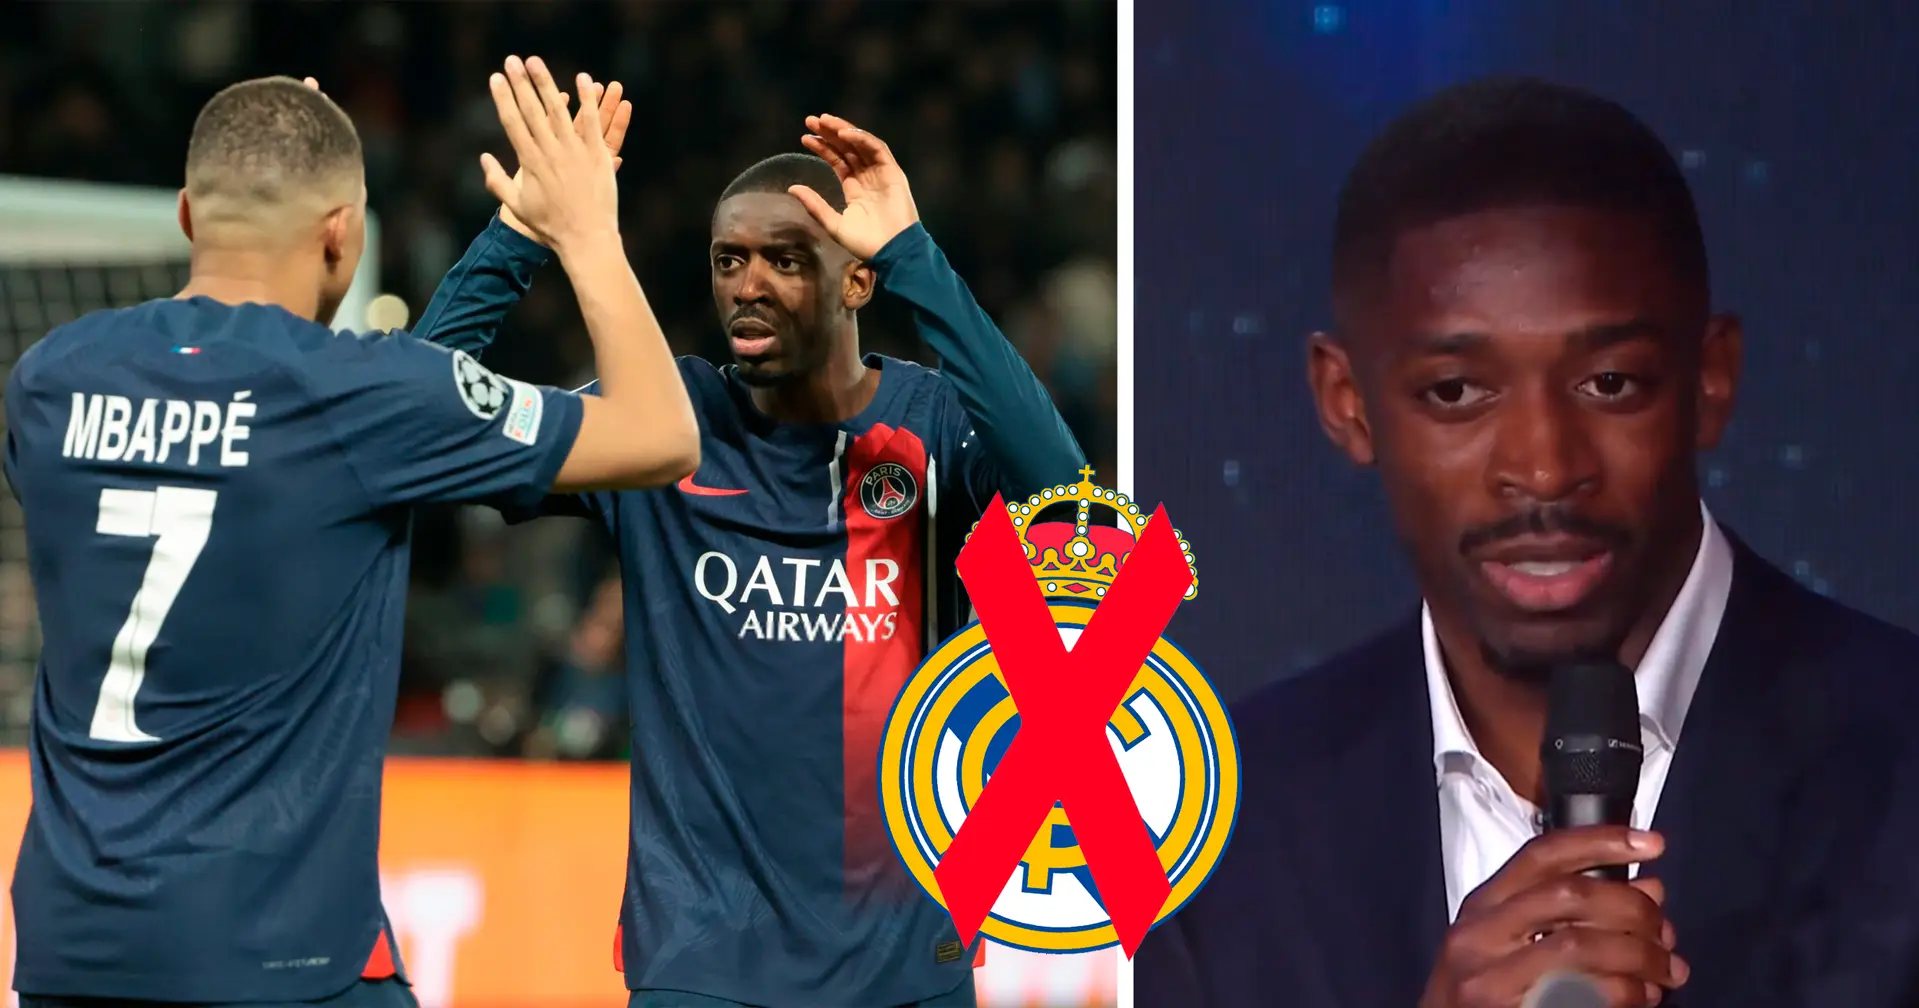 ÚLTIMA HORA: Ousmane Dembélé revela el próximo destino de Mbappé, no el Real Madrid